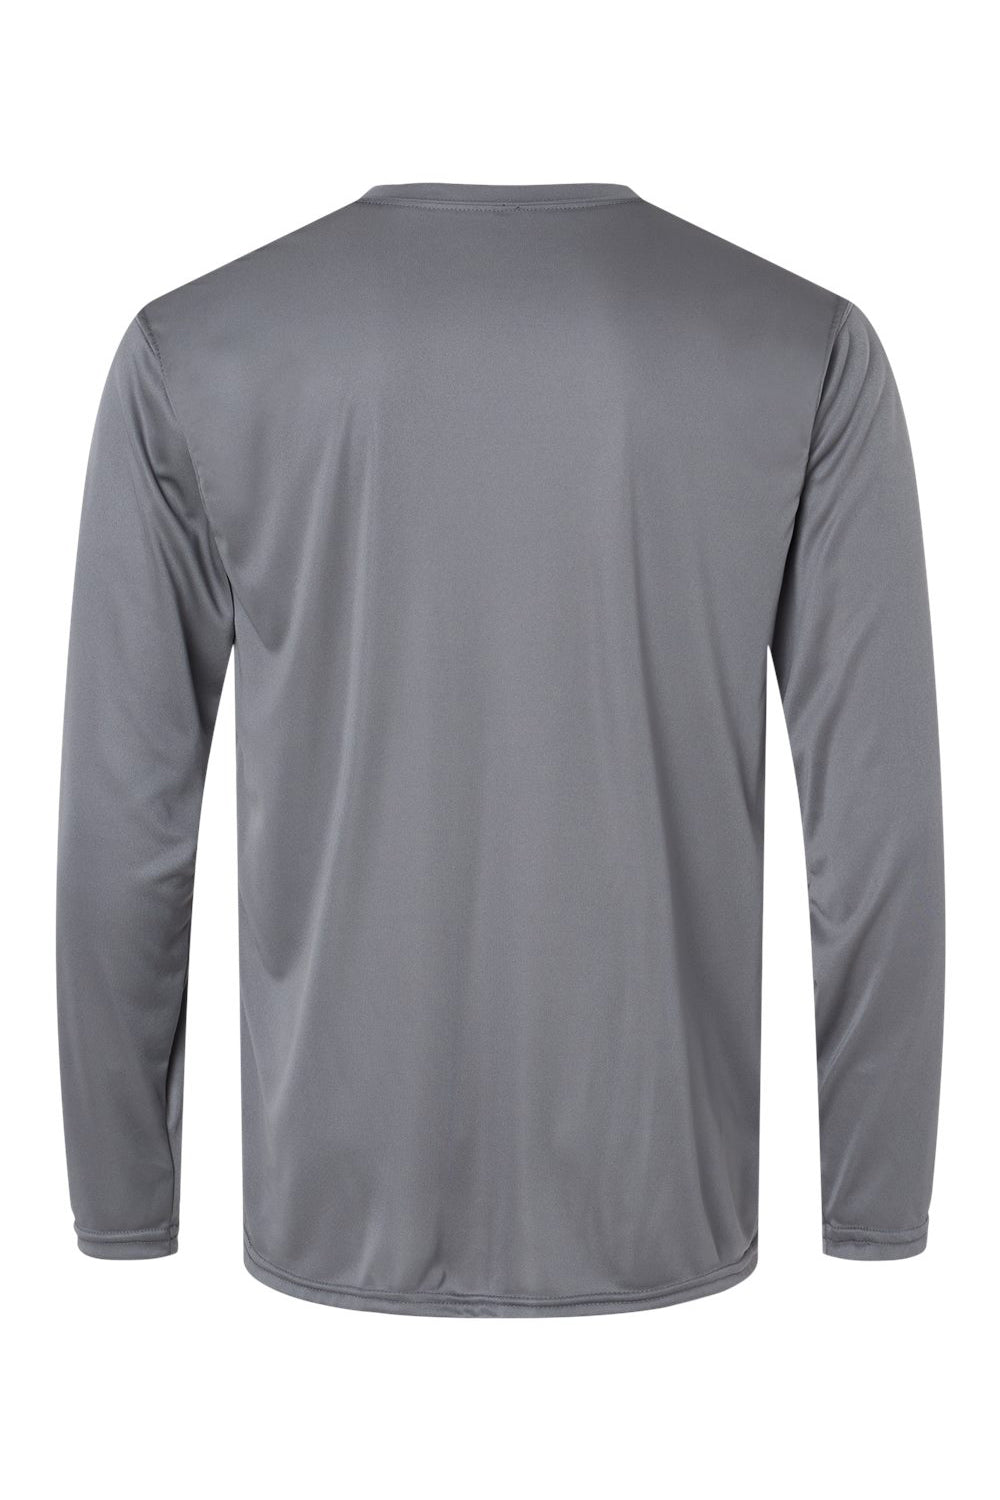 Holloway 222822 Mens Momentum Long Sleeve Crewneck T-Shirt Graphite Grey Flat Back